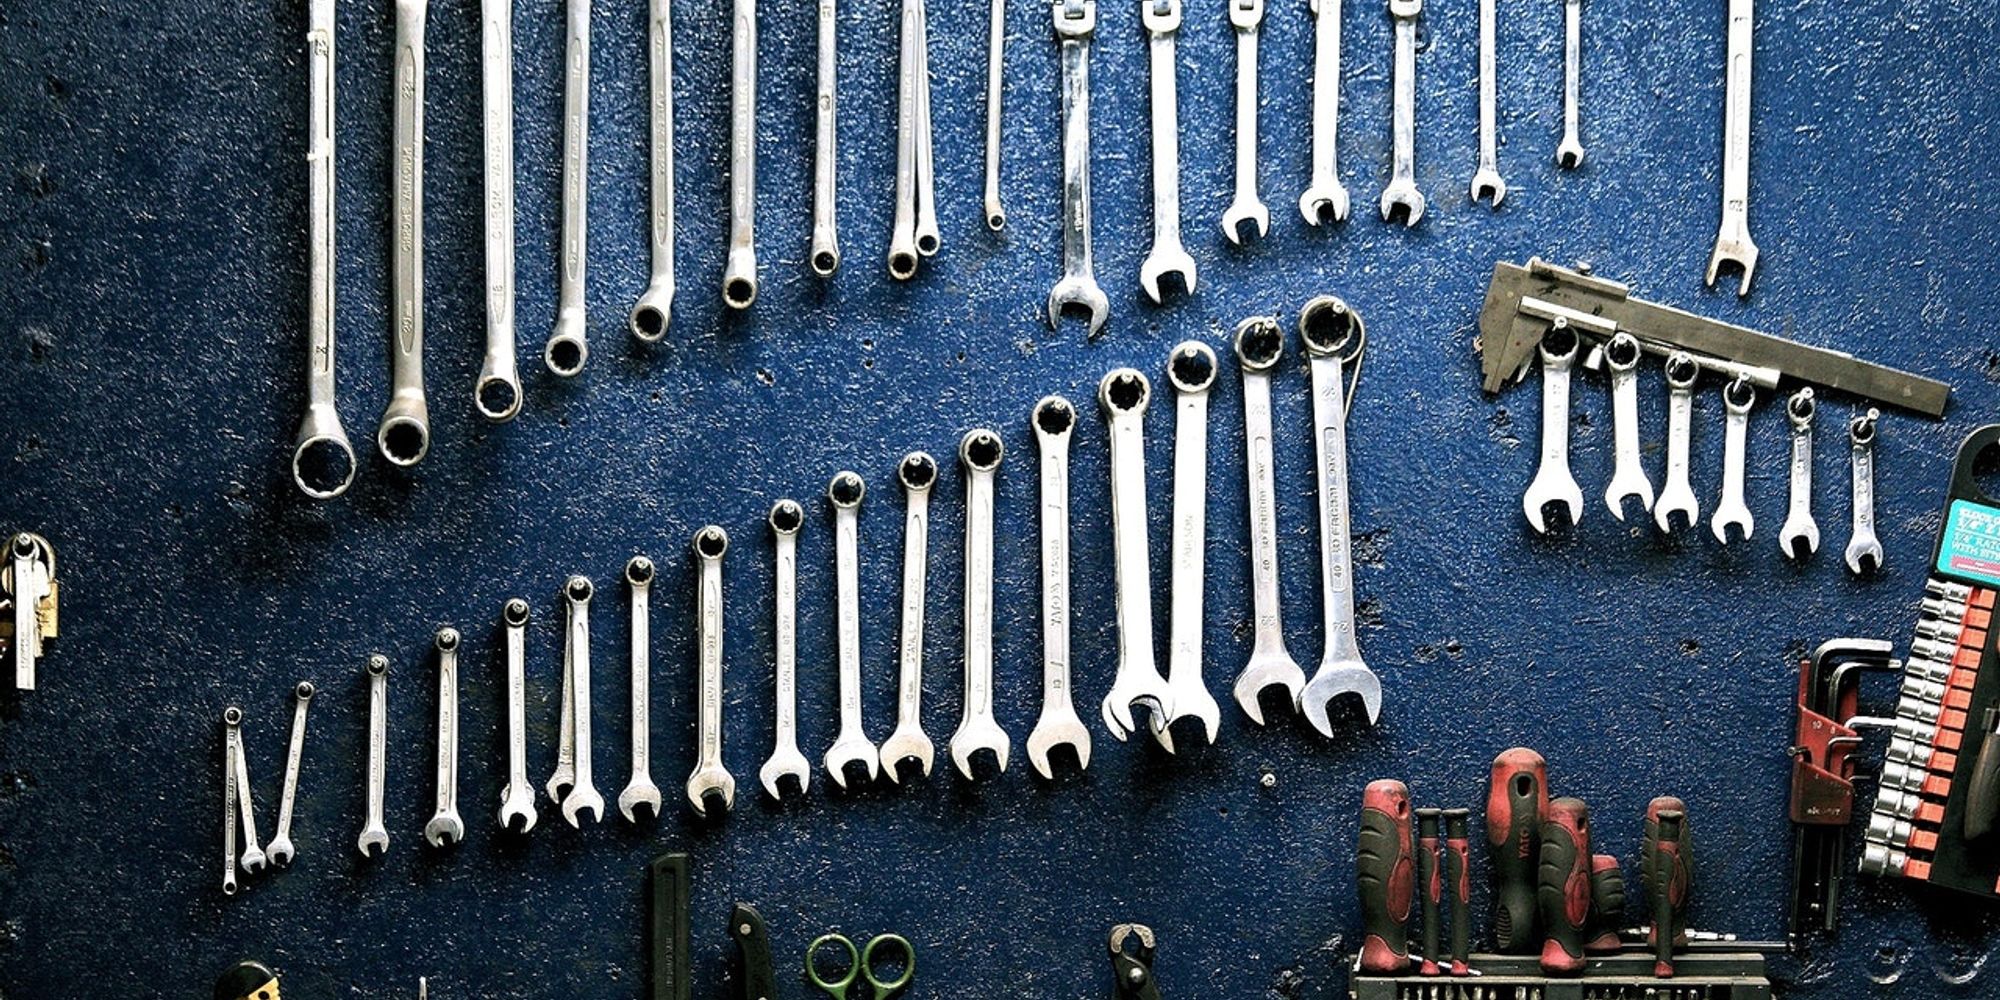 Keys Workshop Mechanic Tools 162553